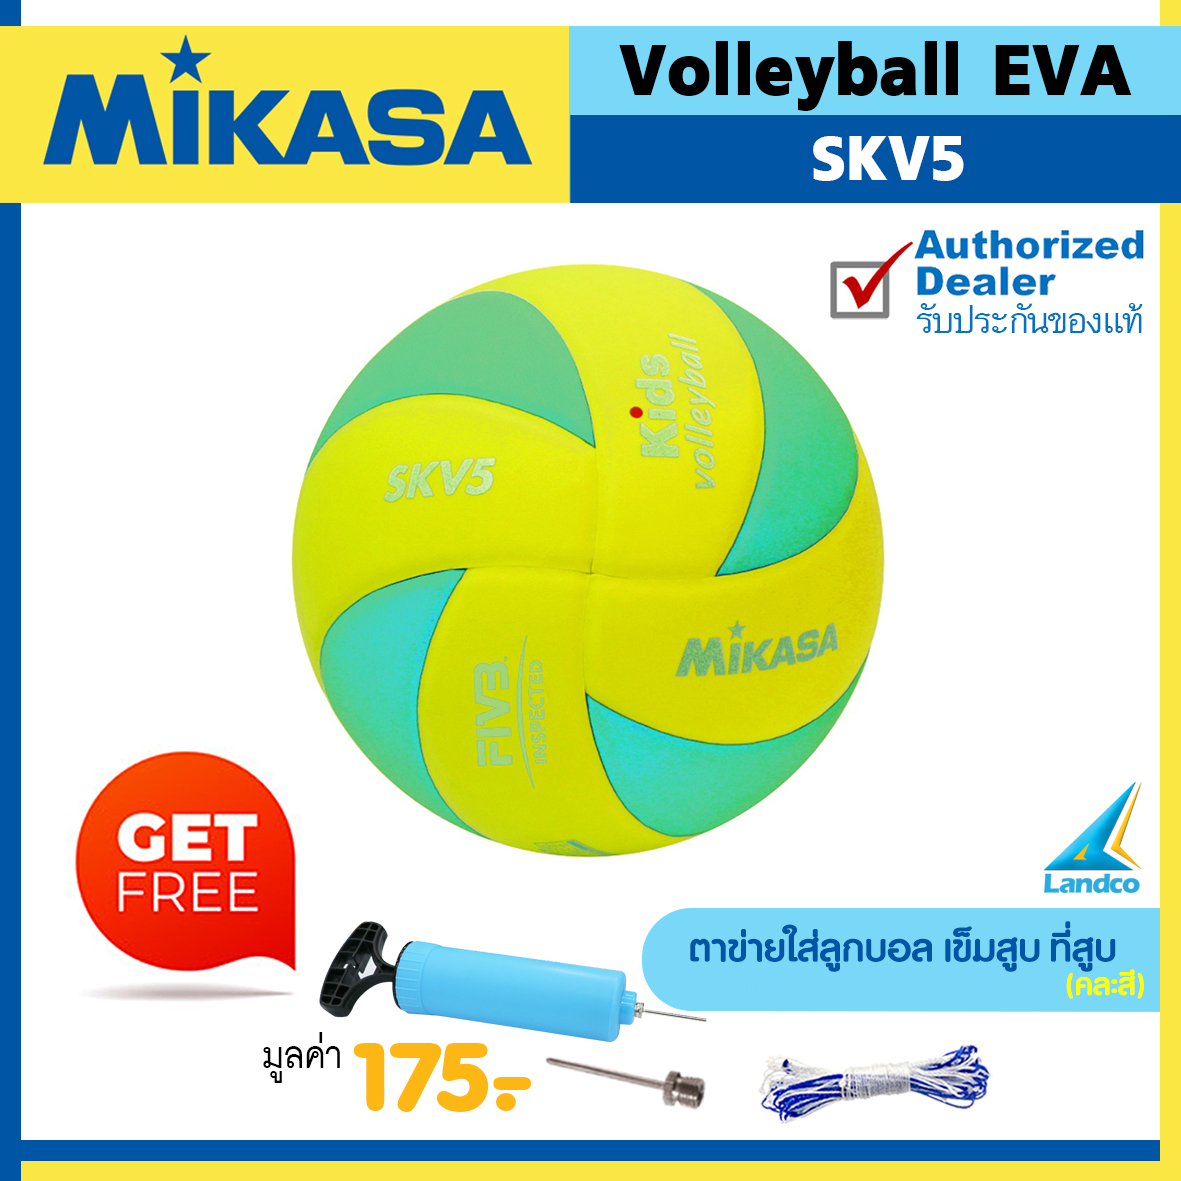 MIKASA ลูกวอลเลย์บอลหนัง สำหรับเด็ก Volleyball SKV5 เบอร์ 5 (มี 3 สี) (แถมฟรี ตาข่ายใส่ลูกบอล + เข็มสูบ + สูบลมมือ SPL)